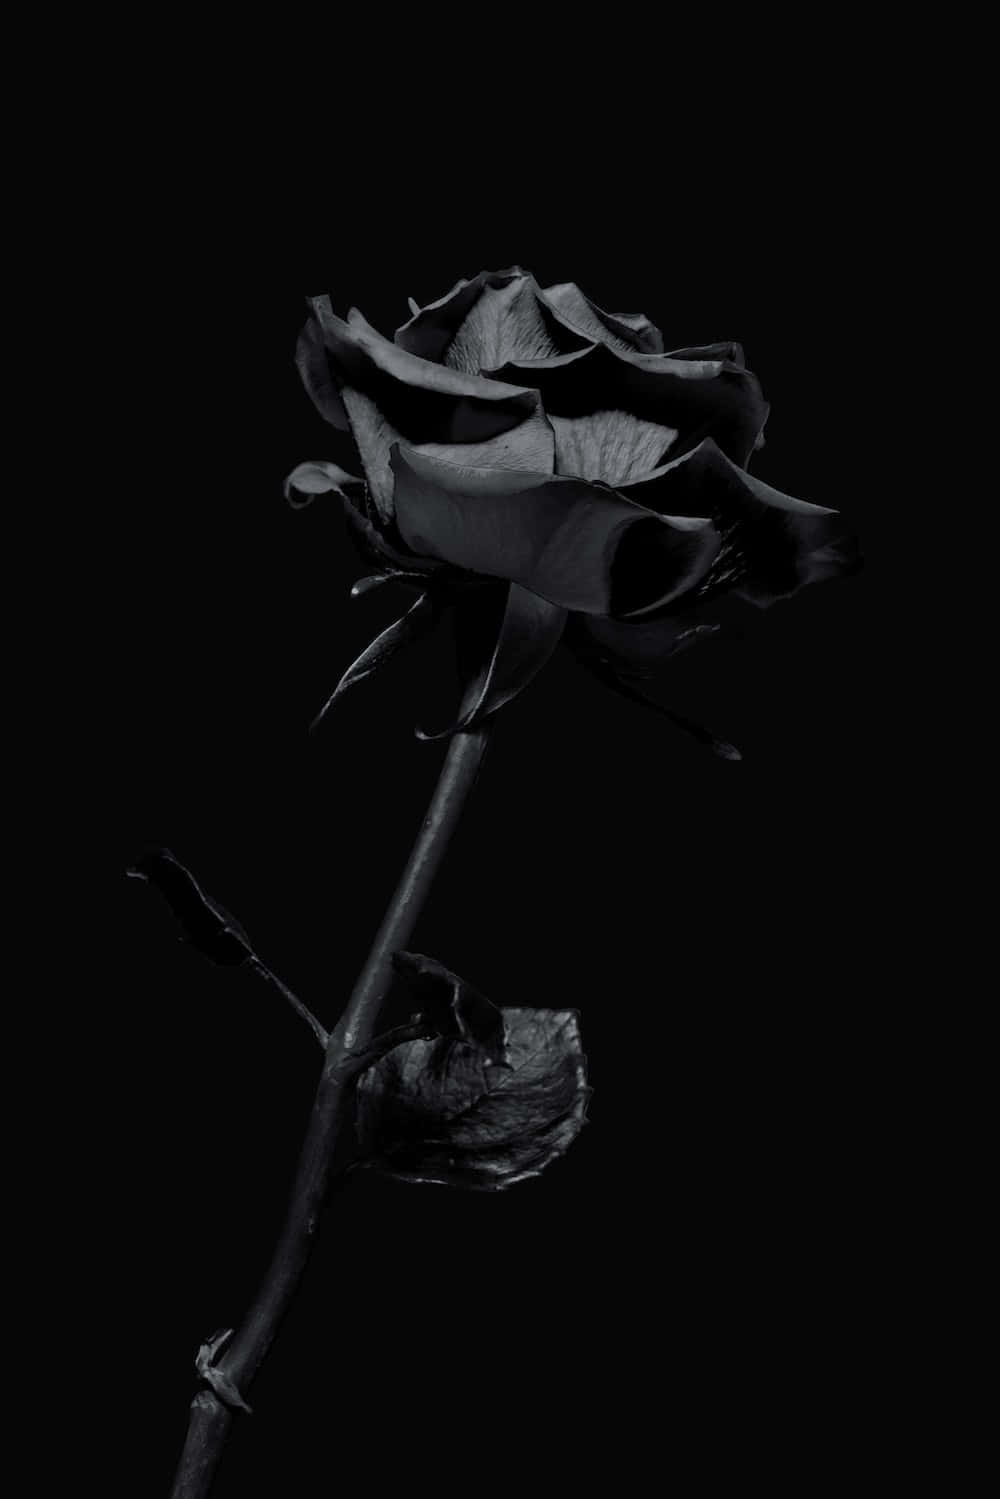 Imagende Una Rosa Negra Oscura.